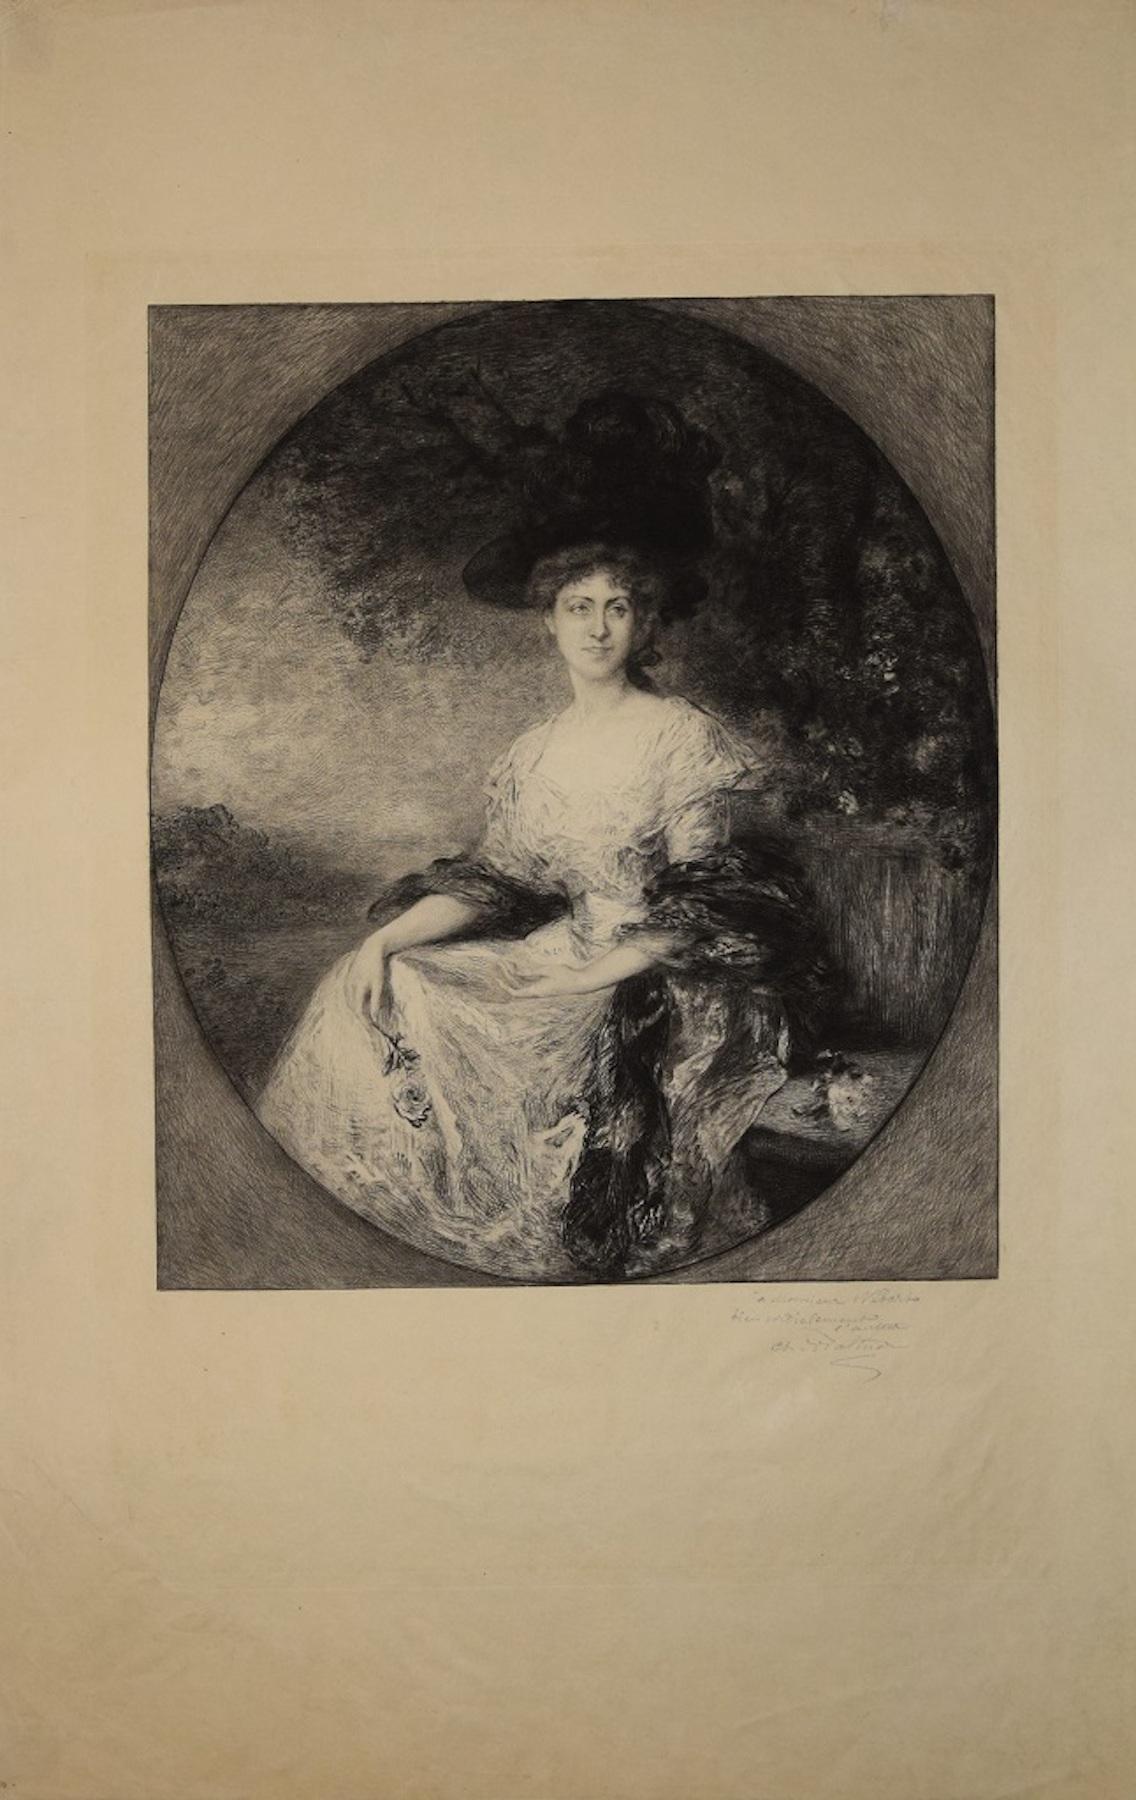 Charles Albert Waltner Portrait Print - Portait of Madame - Original b/w Etching by Charles Waltner - End of 19th cent.